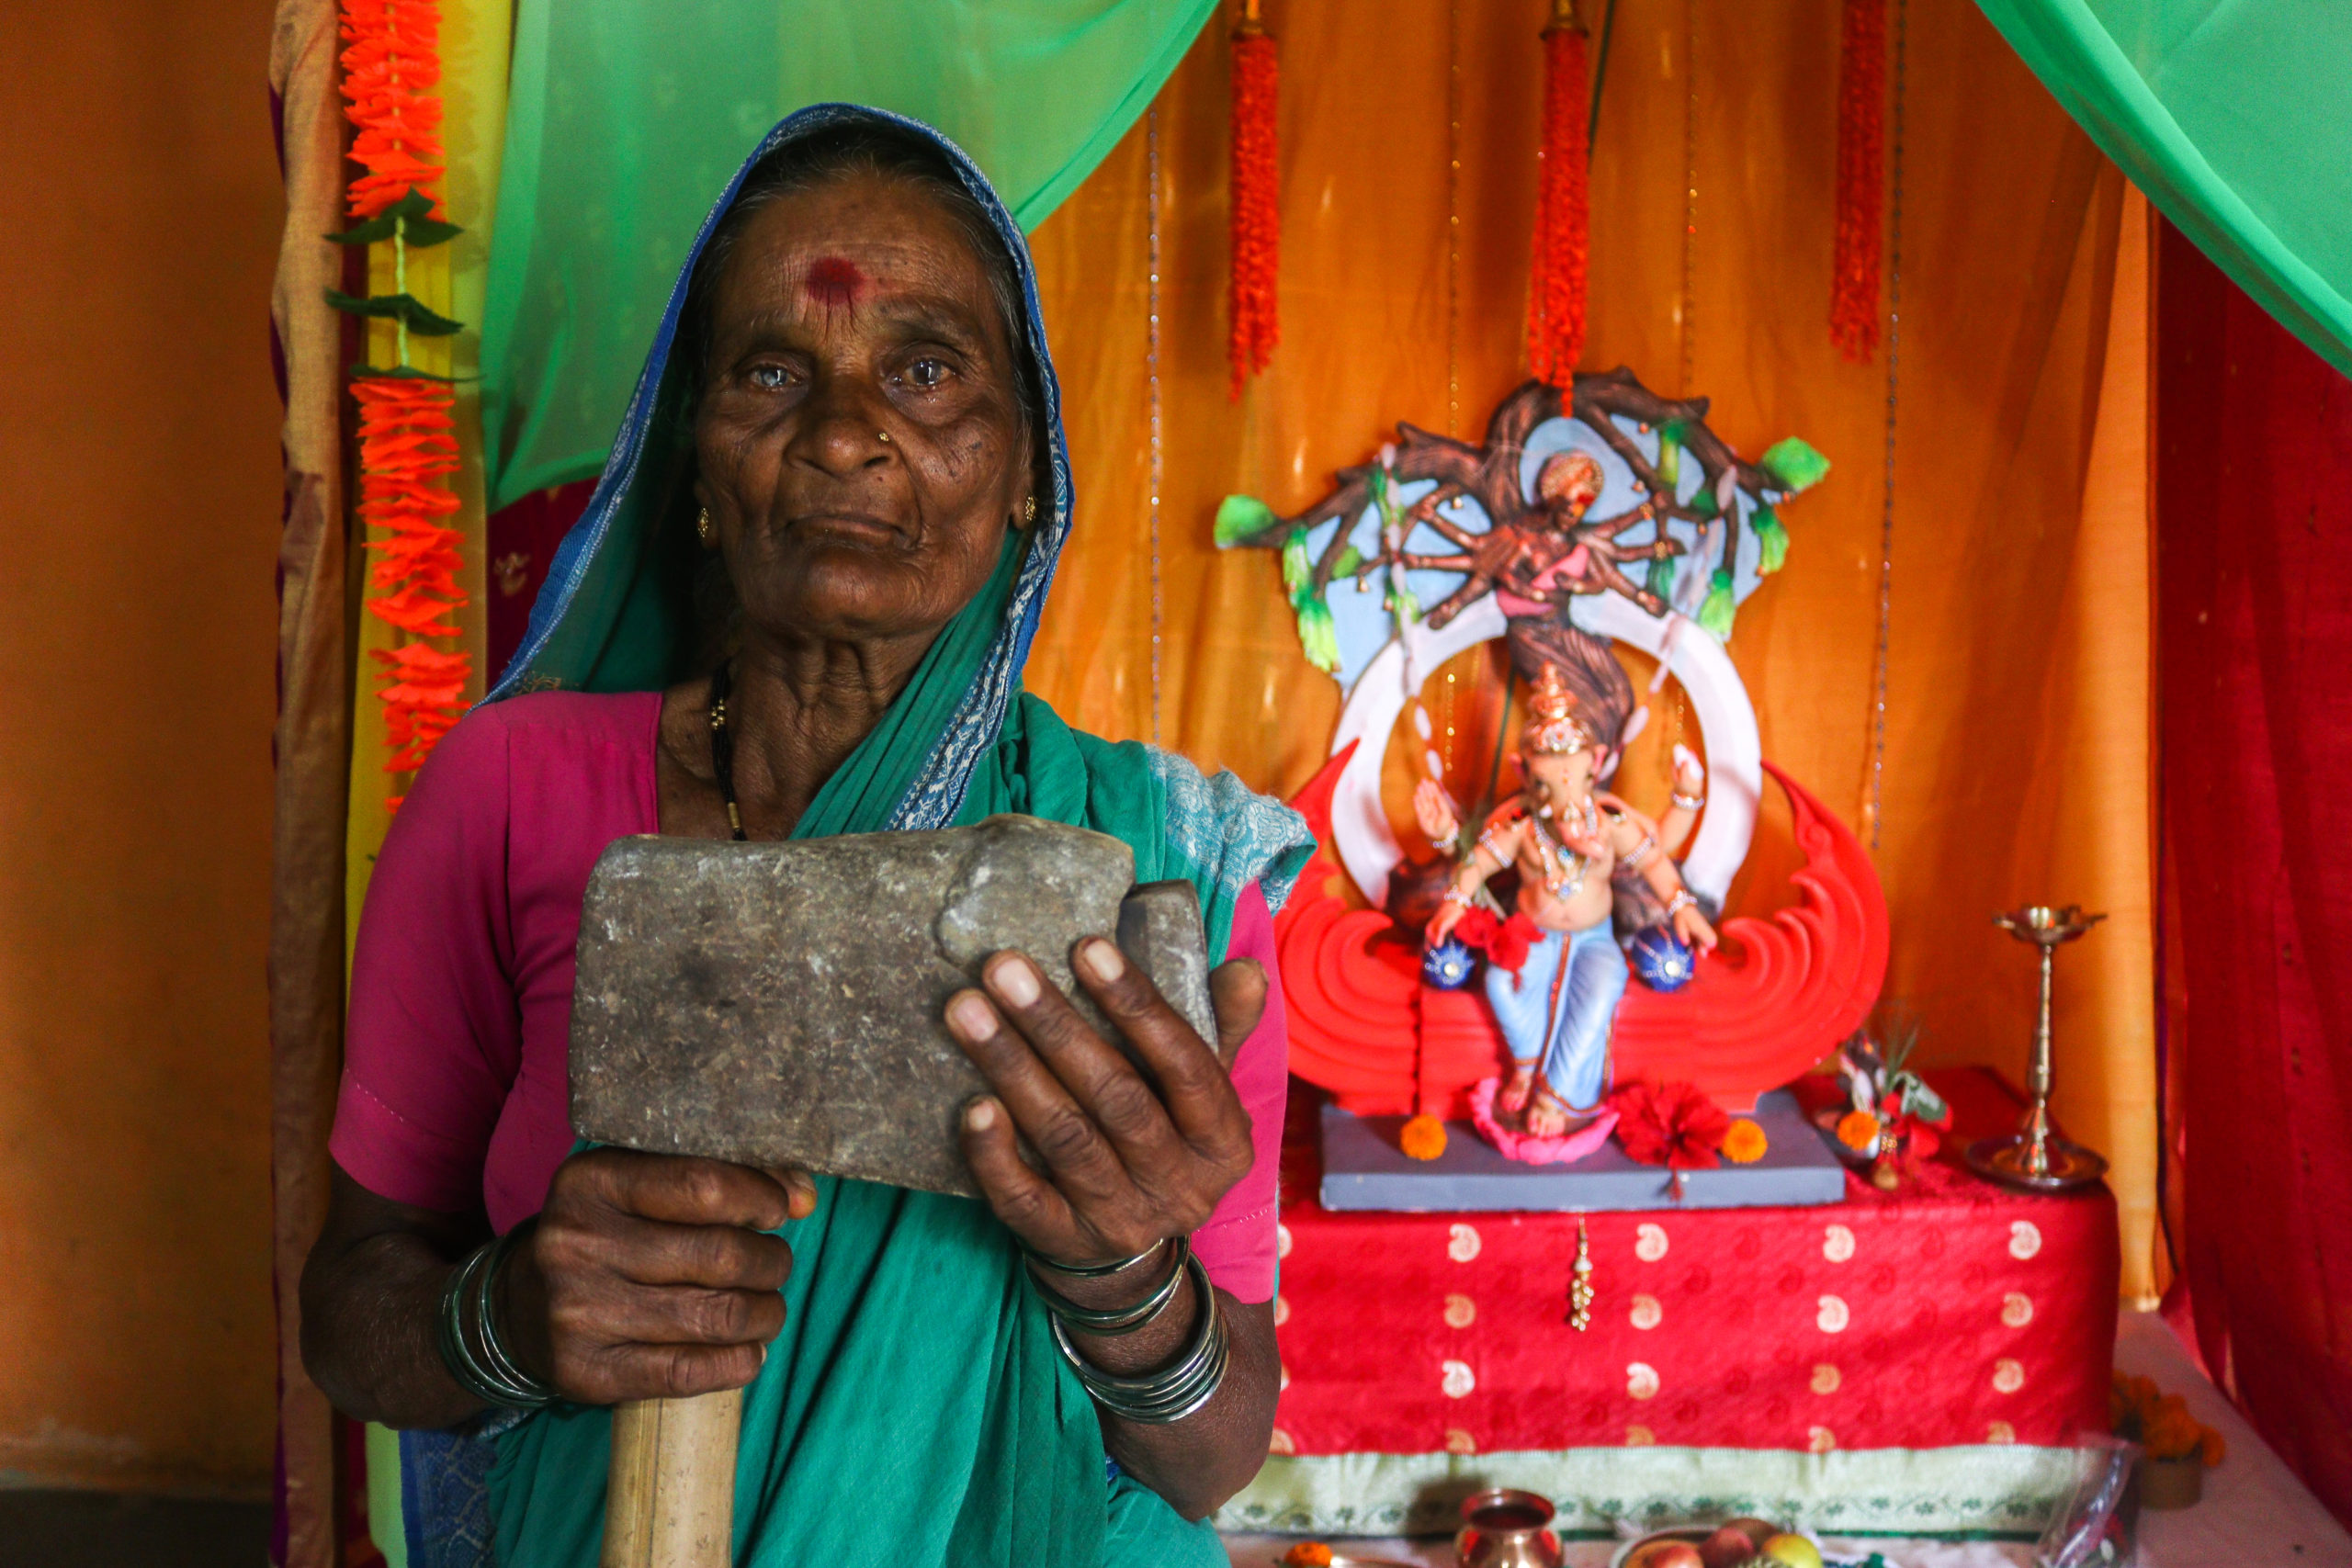 Kastura Chougule holding her son’s sledgehammer, which remains his last memory / credit: Sanket Jain